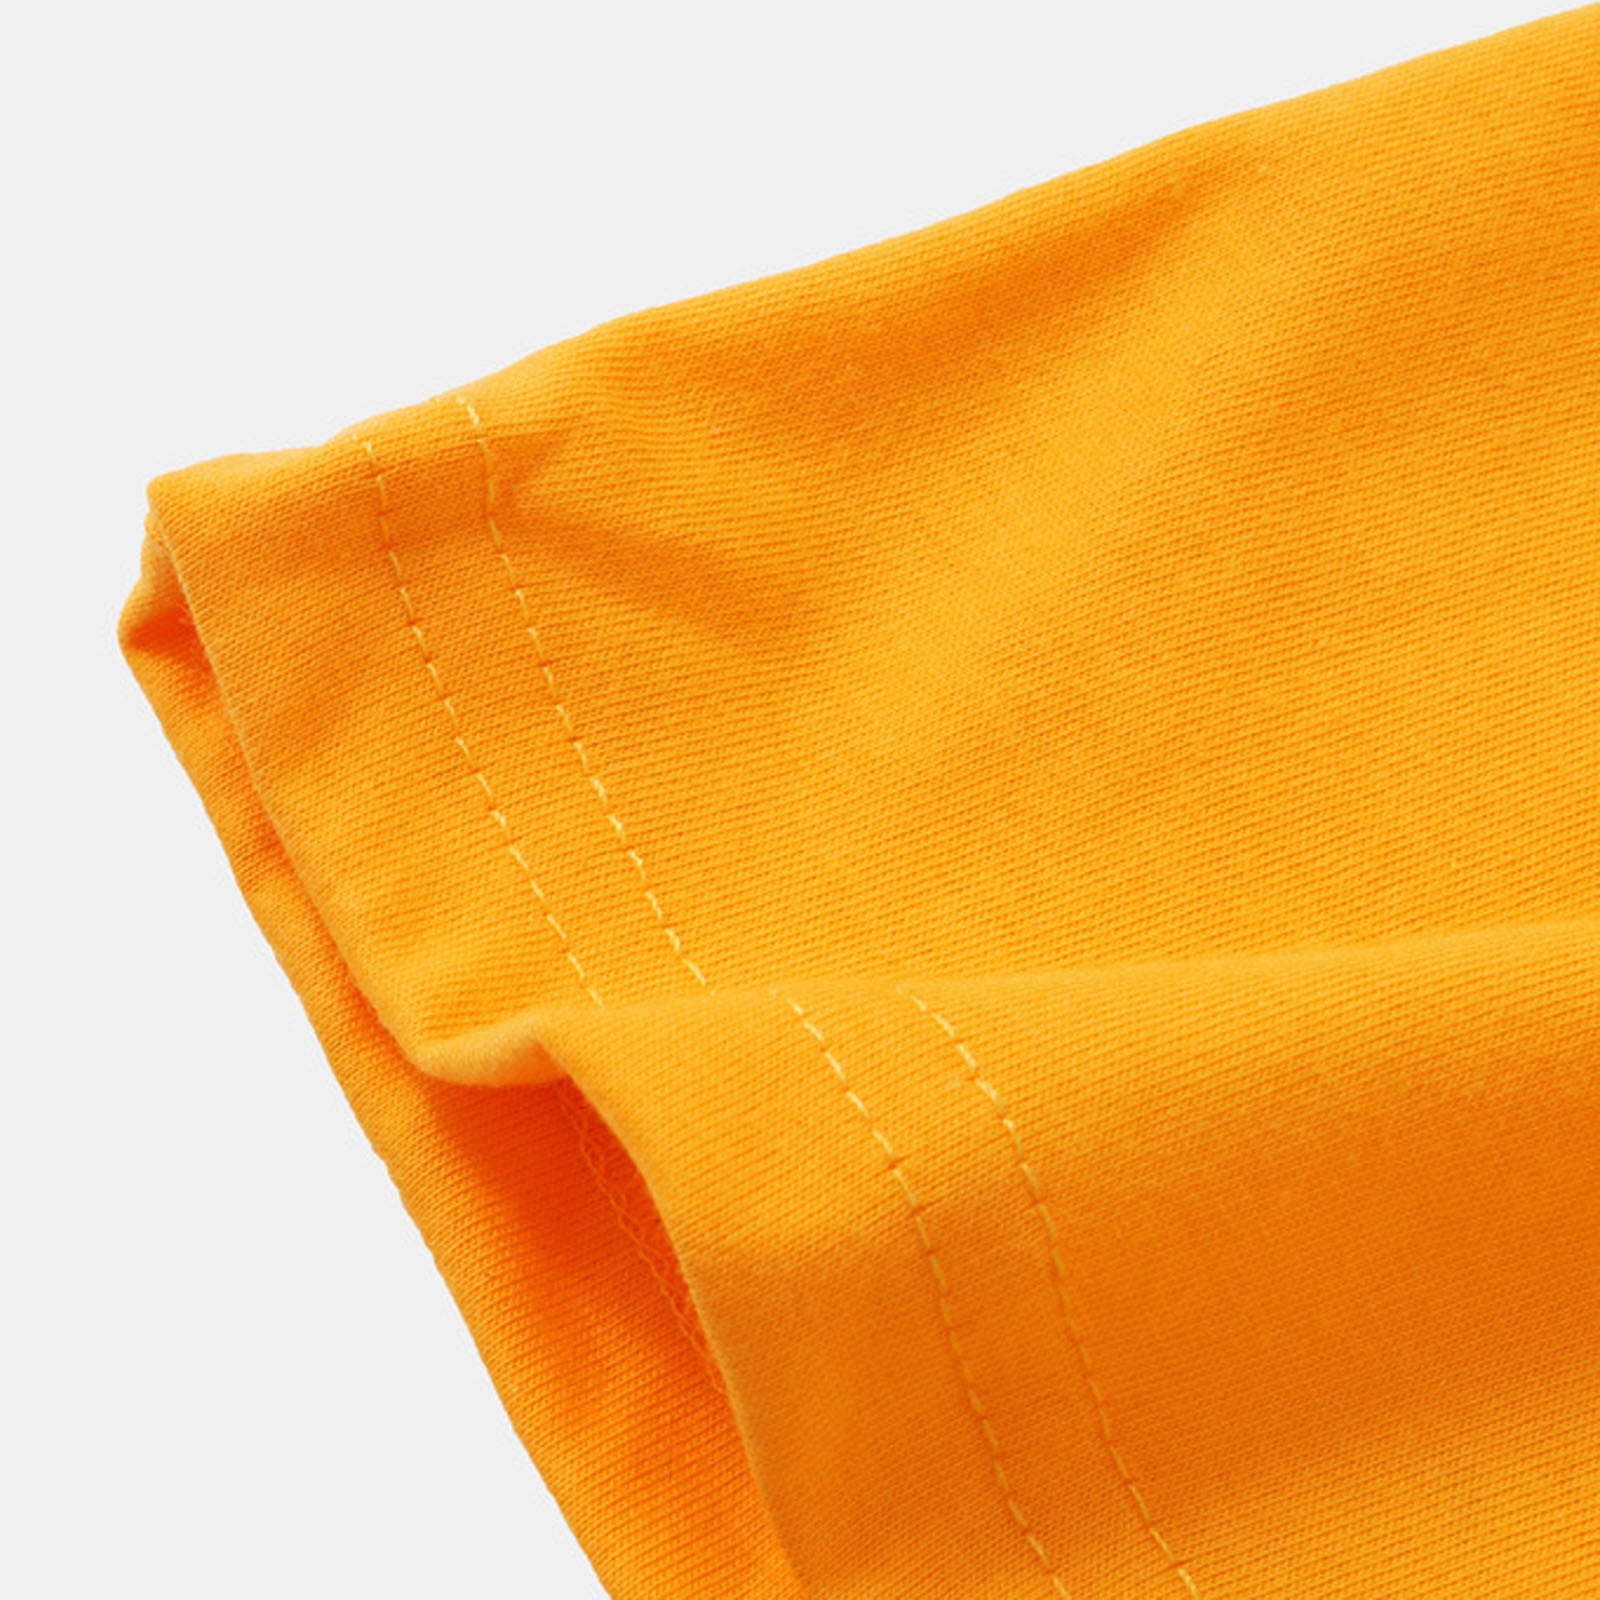 XMMSWDLA Men Short Sleeve Hoodie T Shirt Drawstring Hooded T-Shirts Yellow  Muscle Shirts for Men 